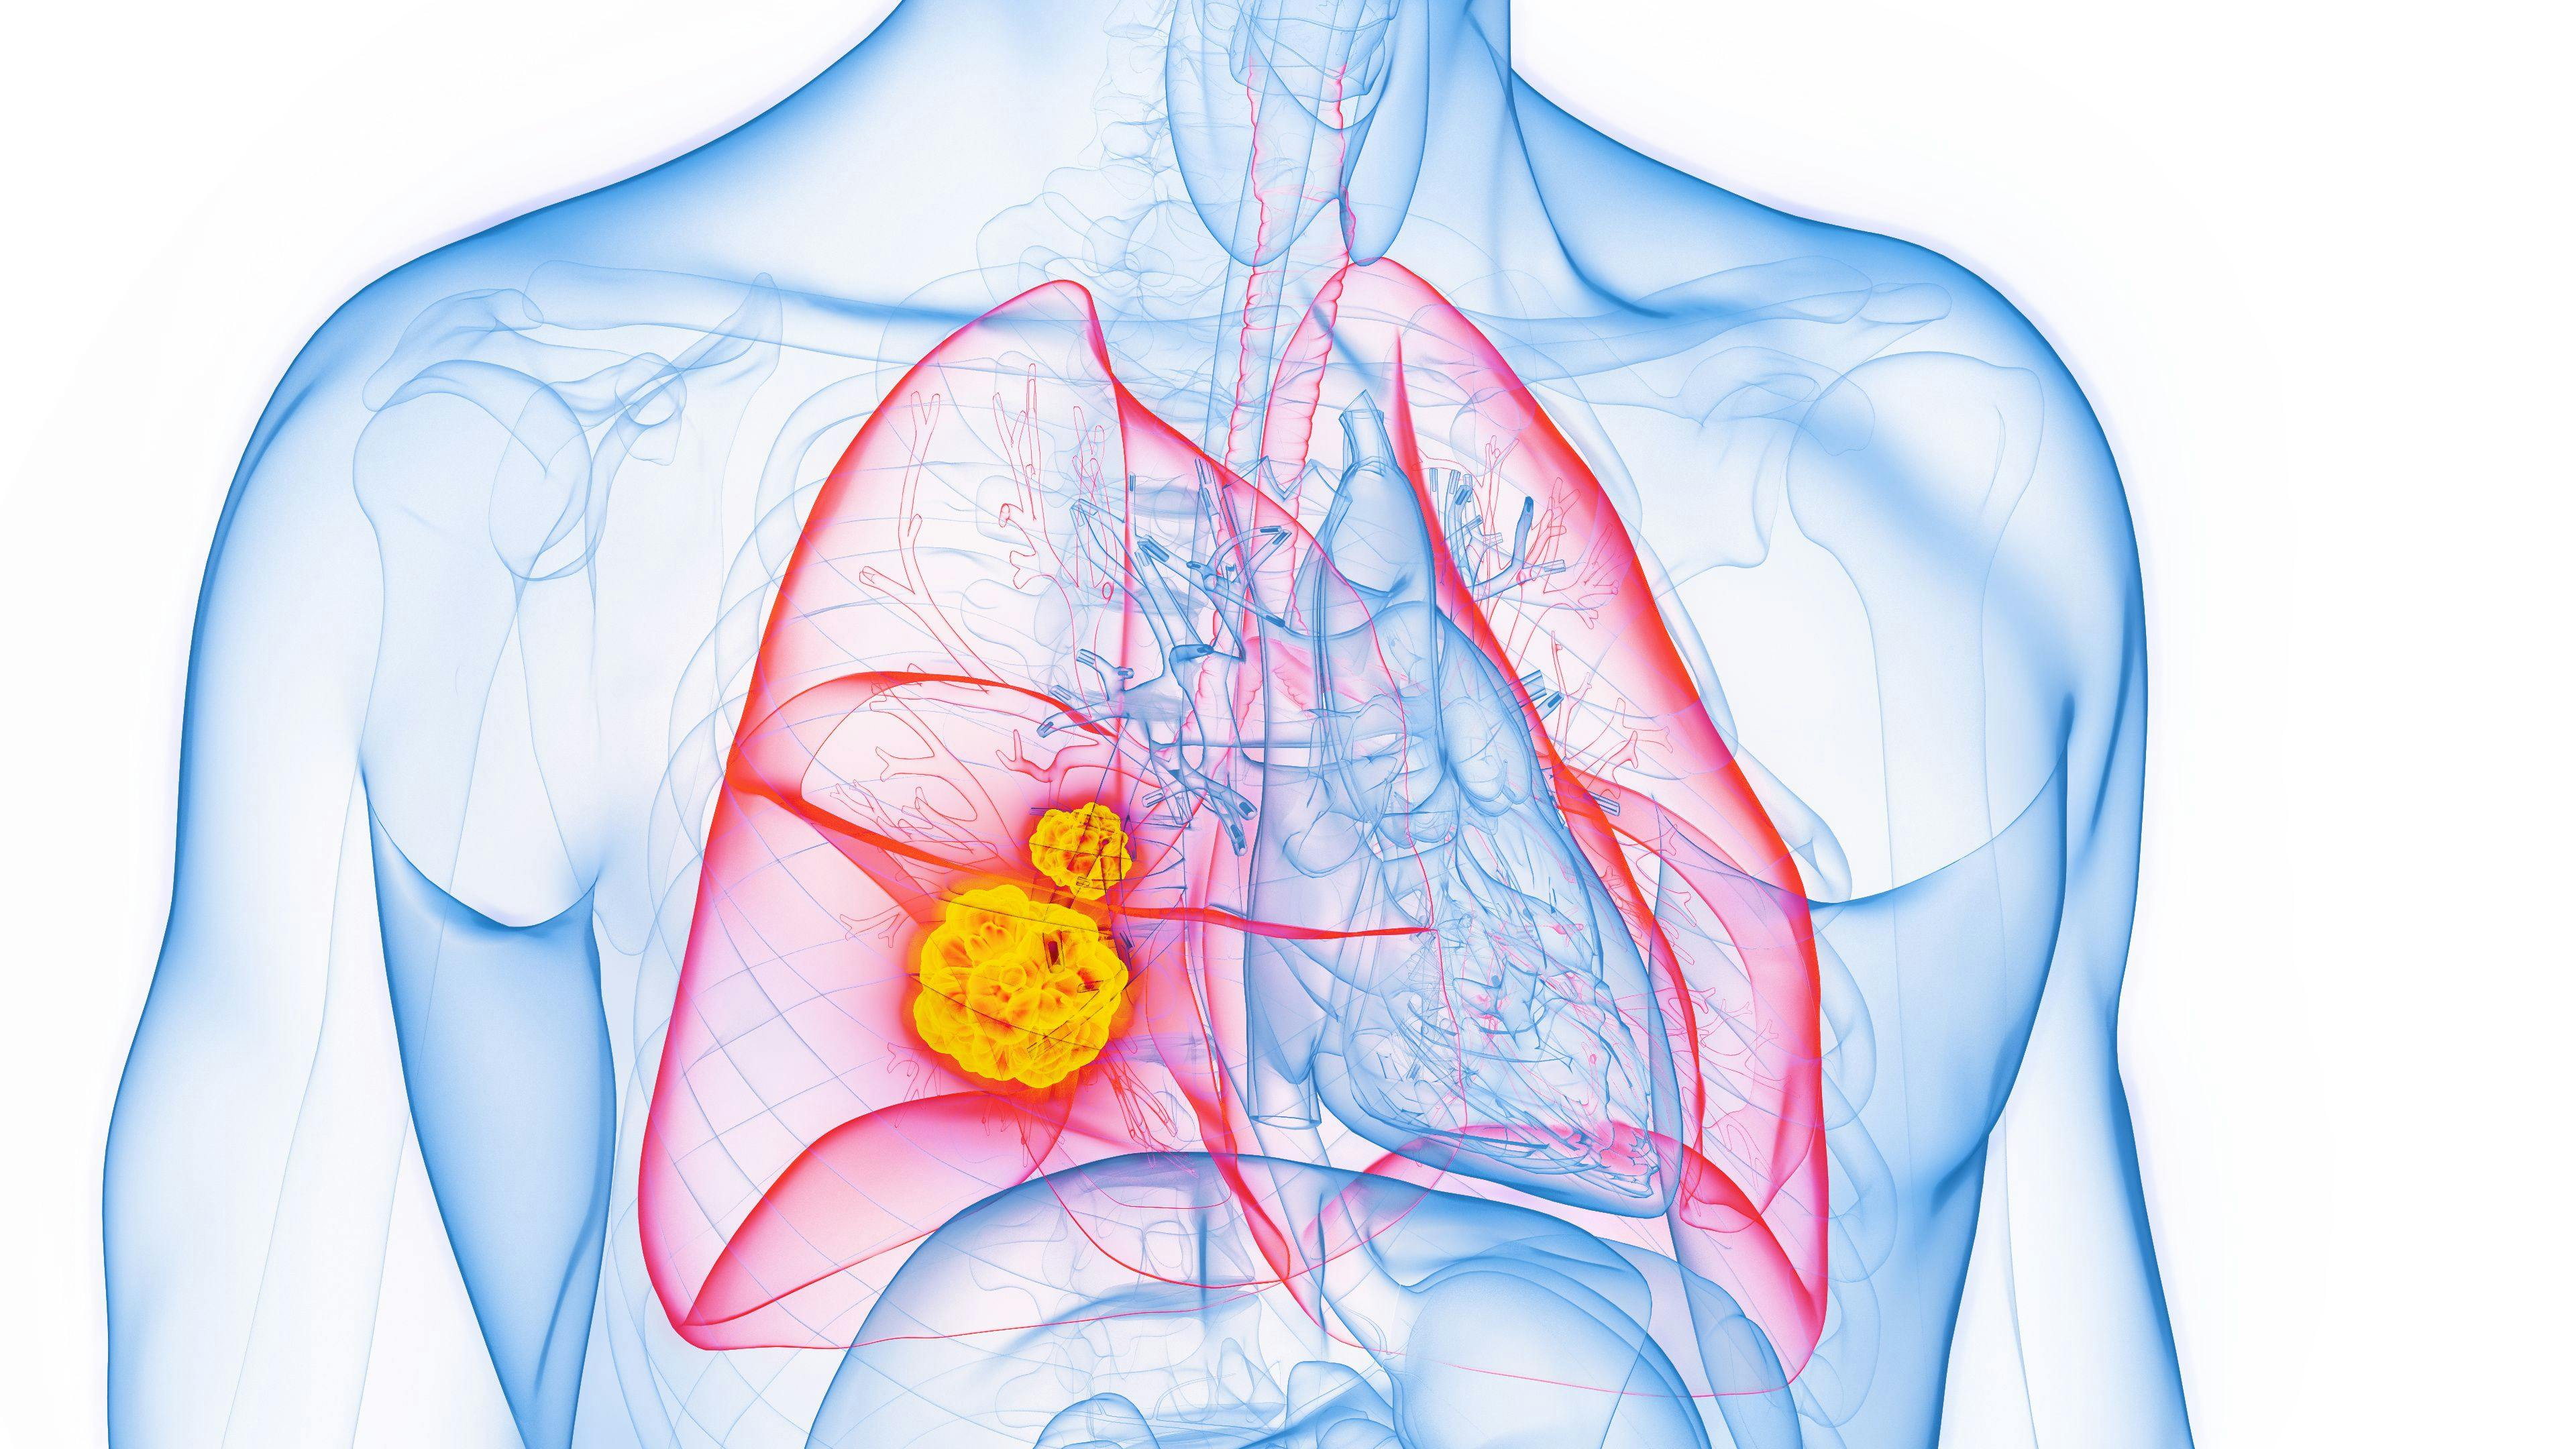 3D rendered Medical Illustration of Male Anatomy - Lung Cancer. | Image Credit: © SciePro - stock.adobe.com